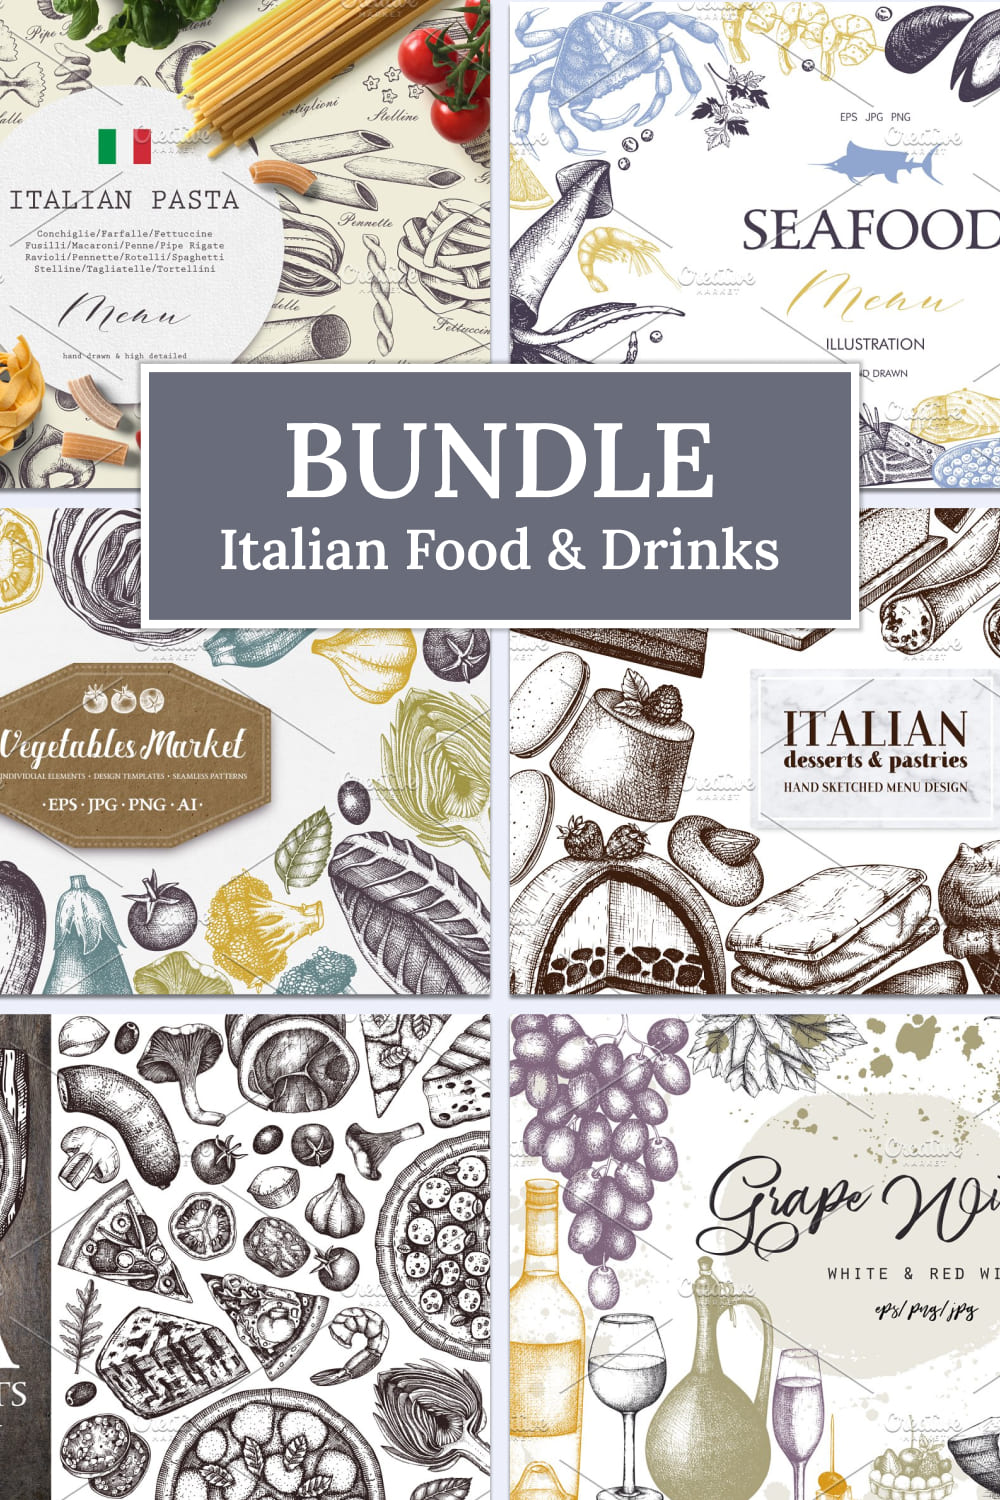 Bundle italian food drinks - pinterest image preview.